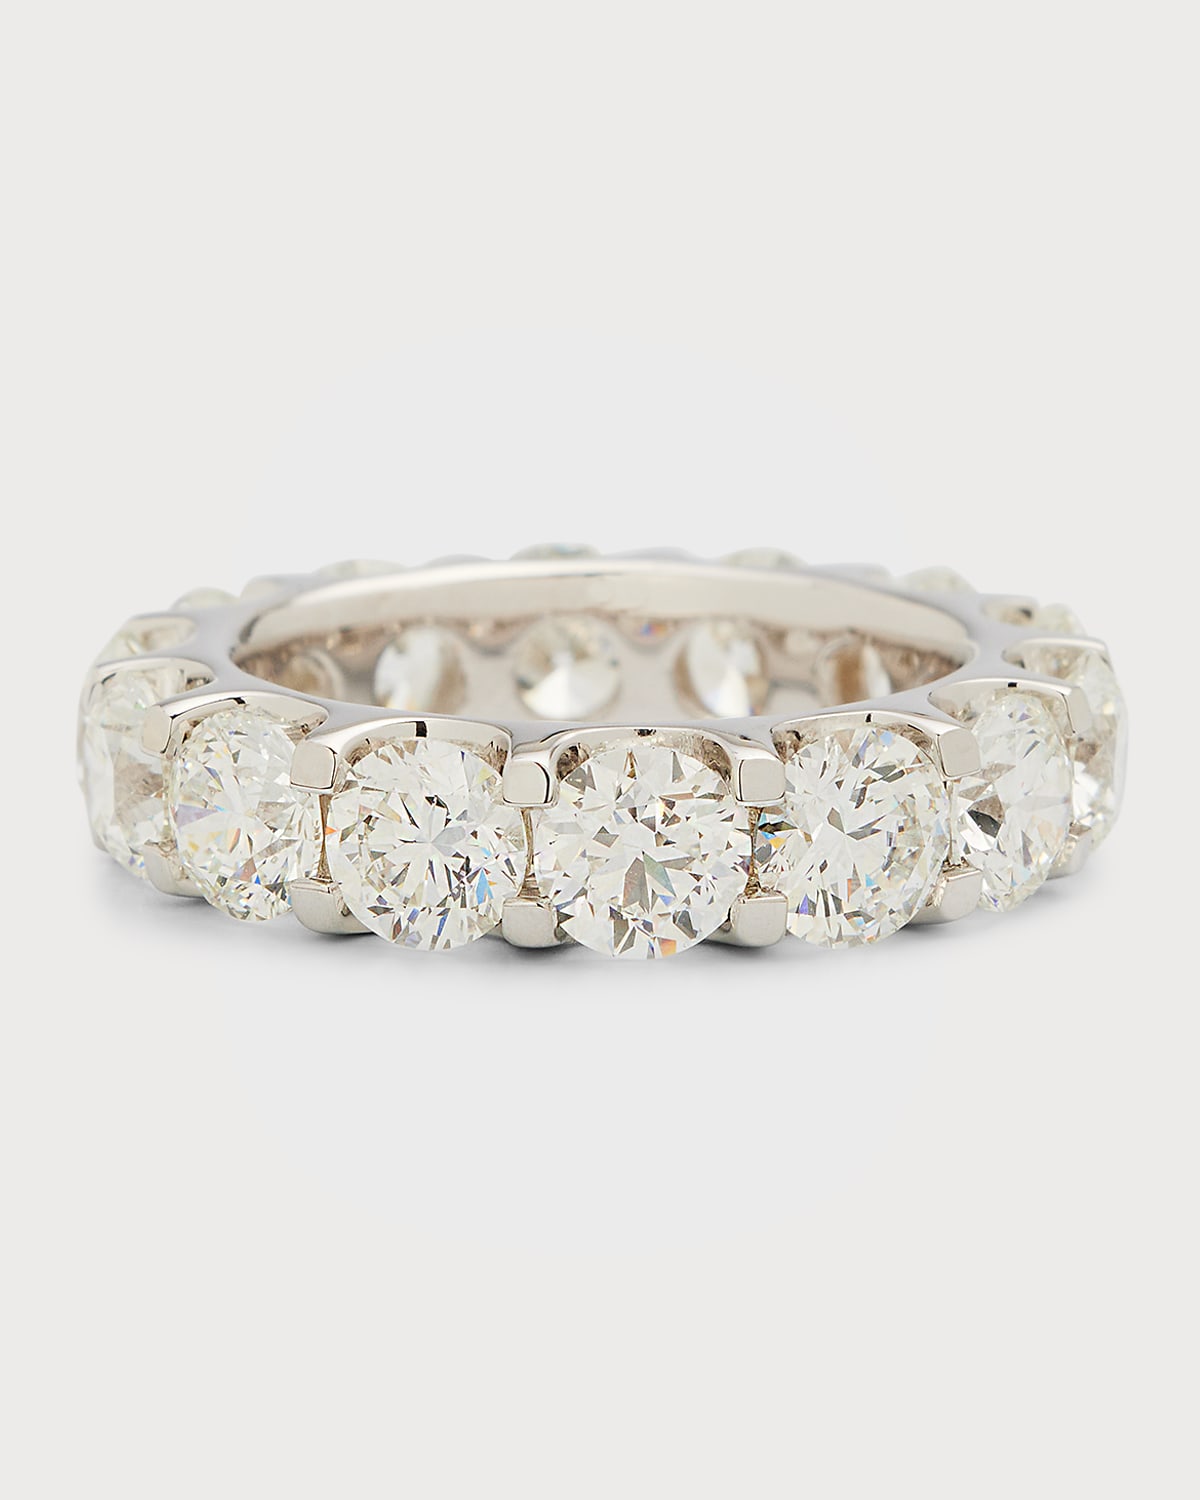 Neiman Marcus Diamonds Diamond 18k White Gold Eternity Band Ring